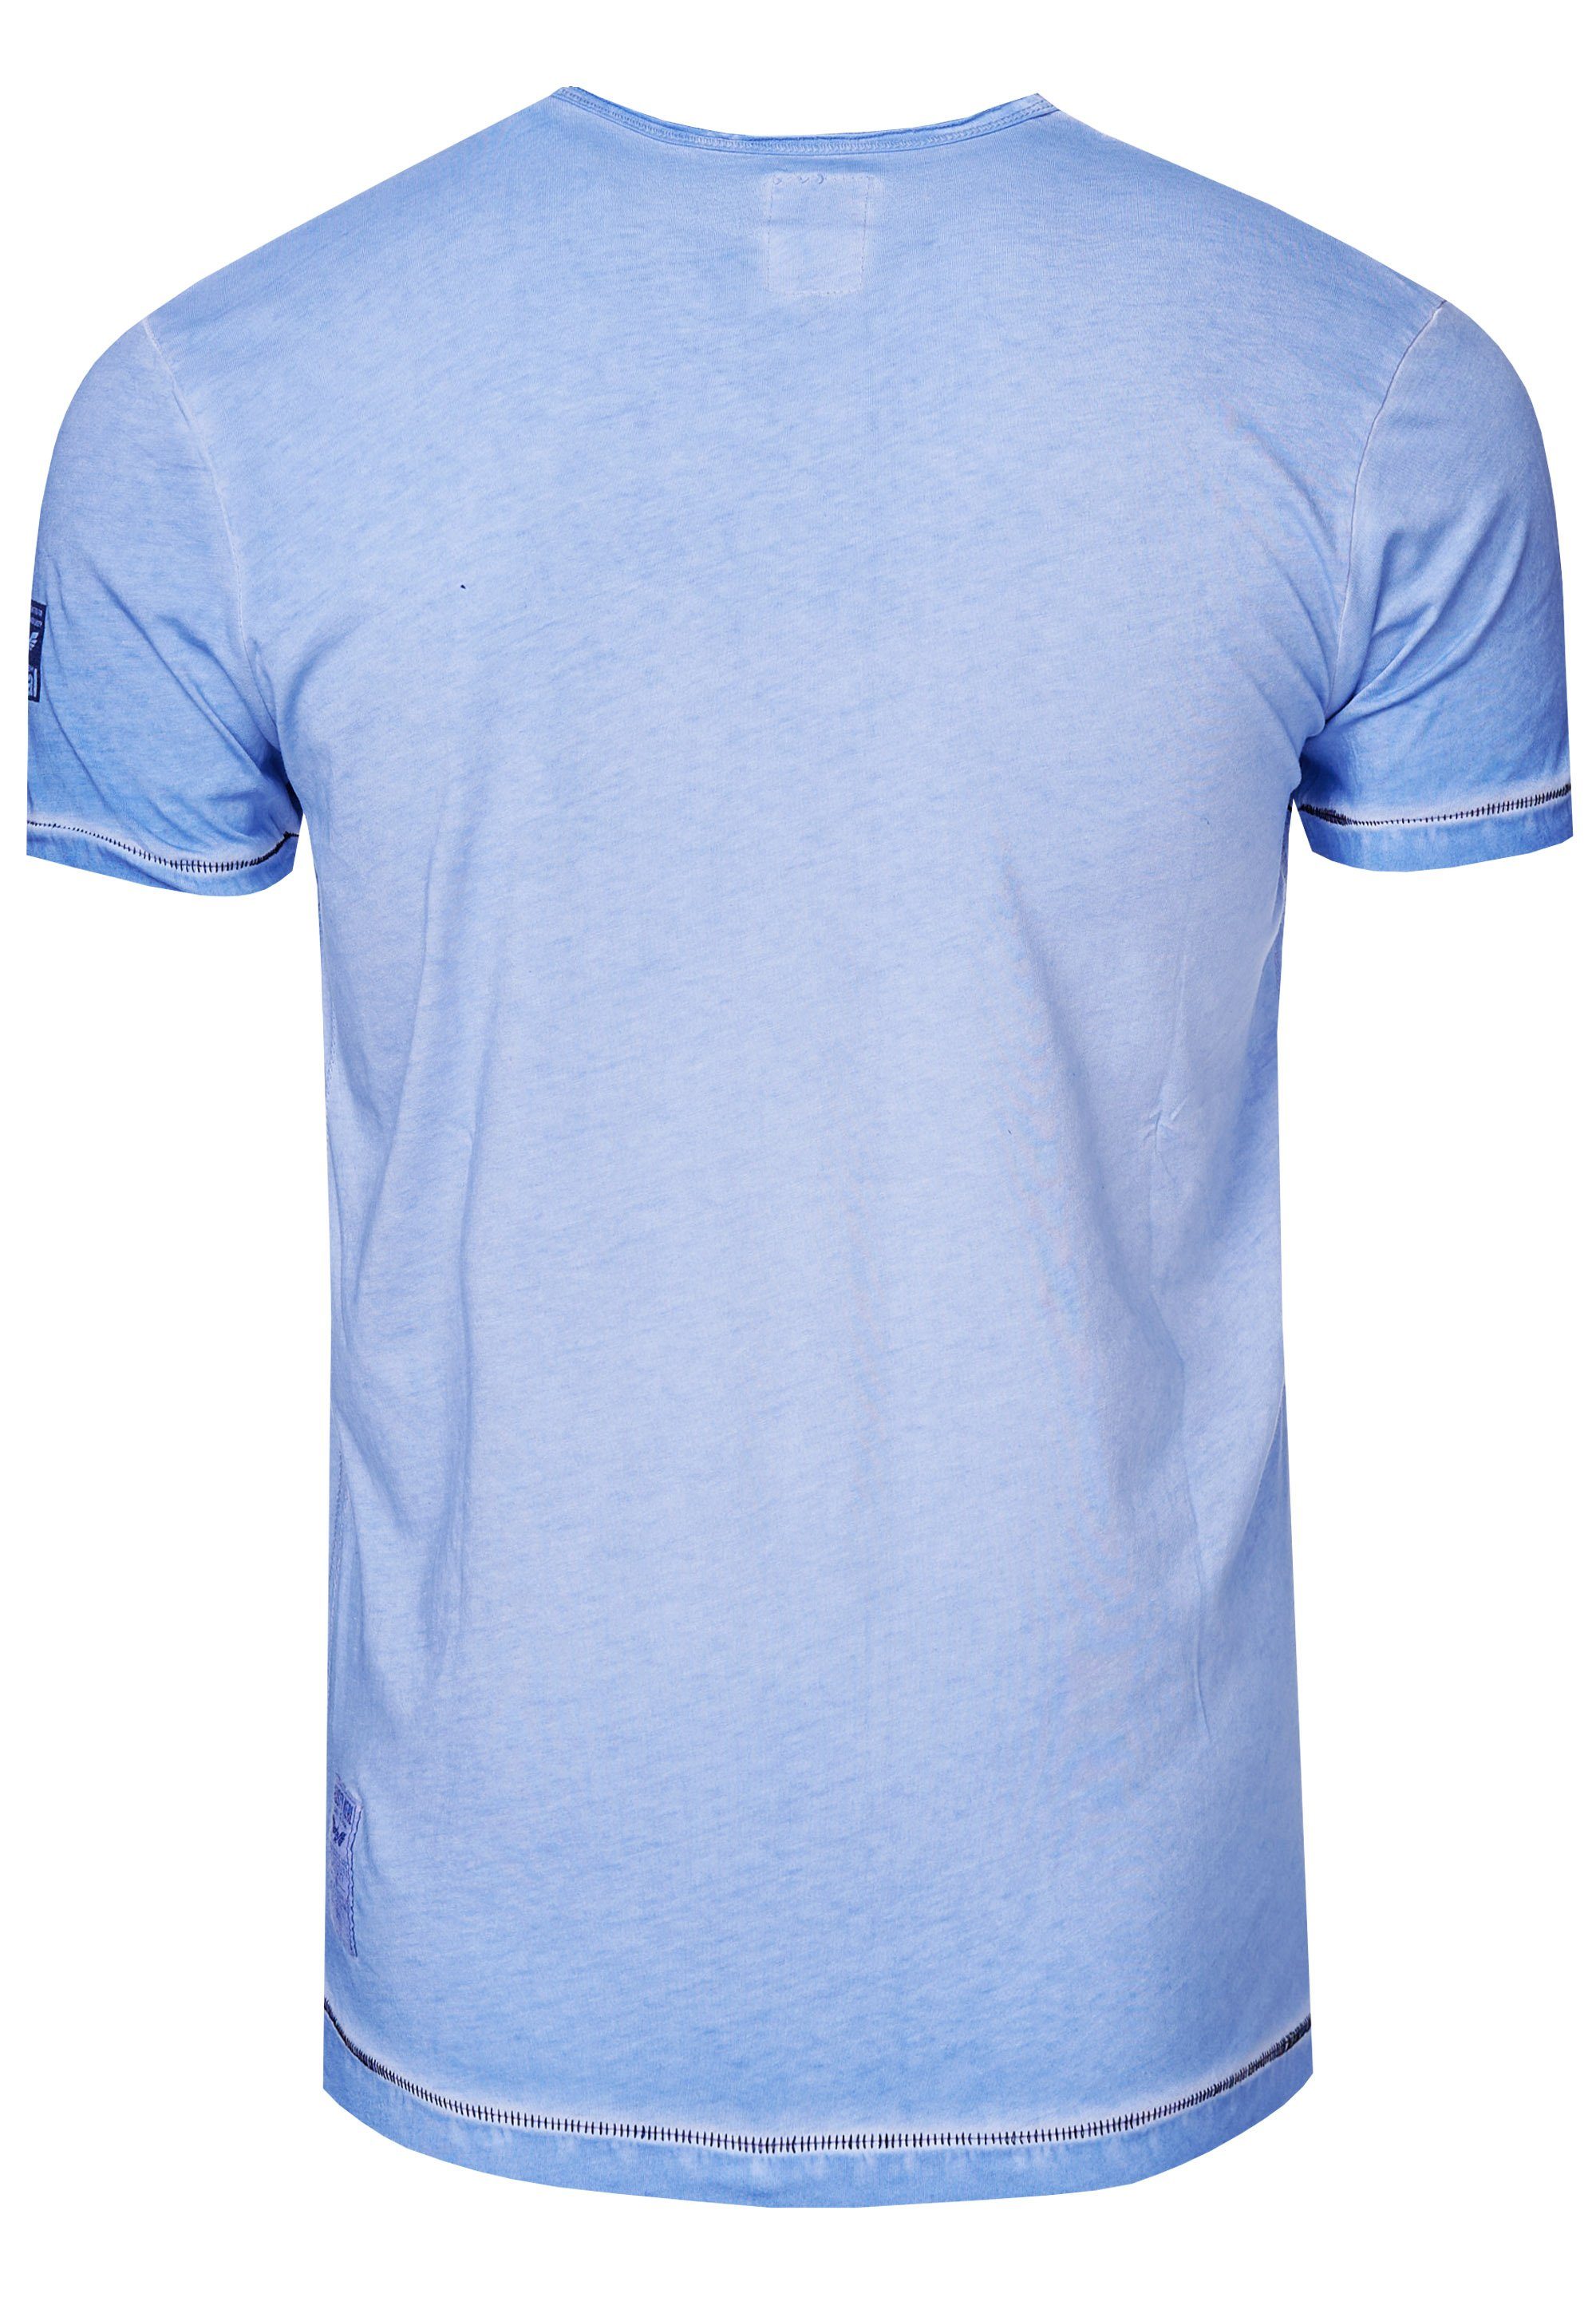 im Rusty Neal T-Shirt blau trendigen Vintage-Look